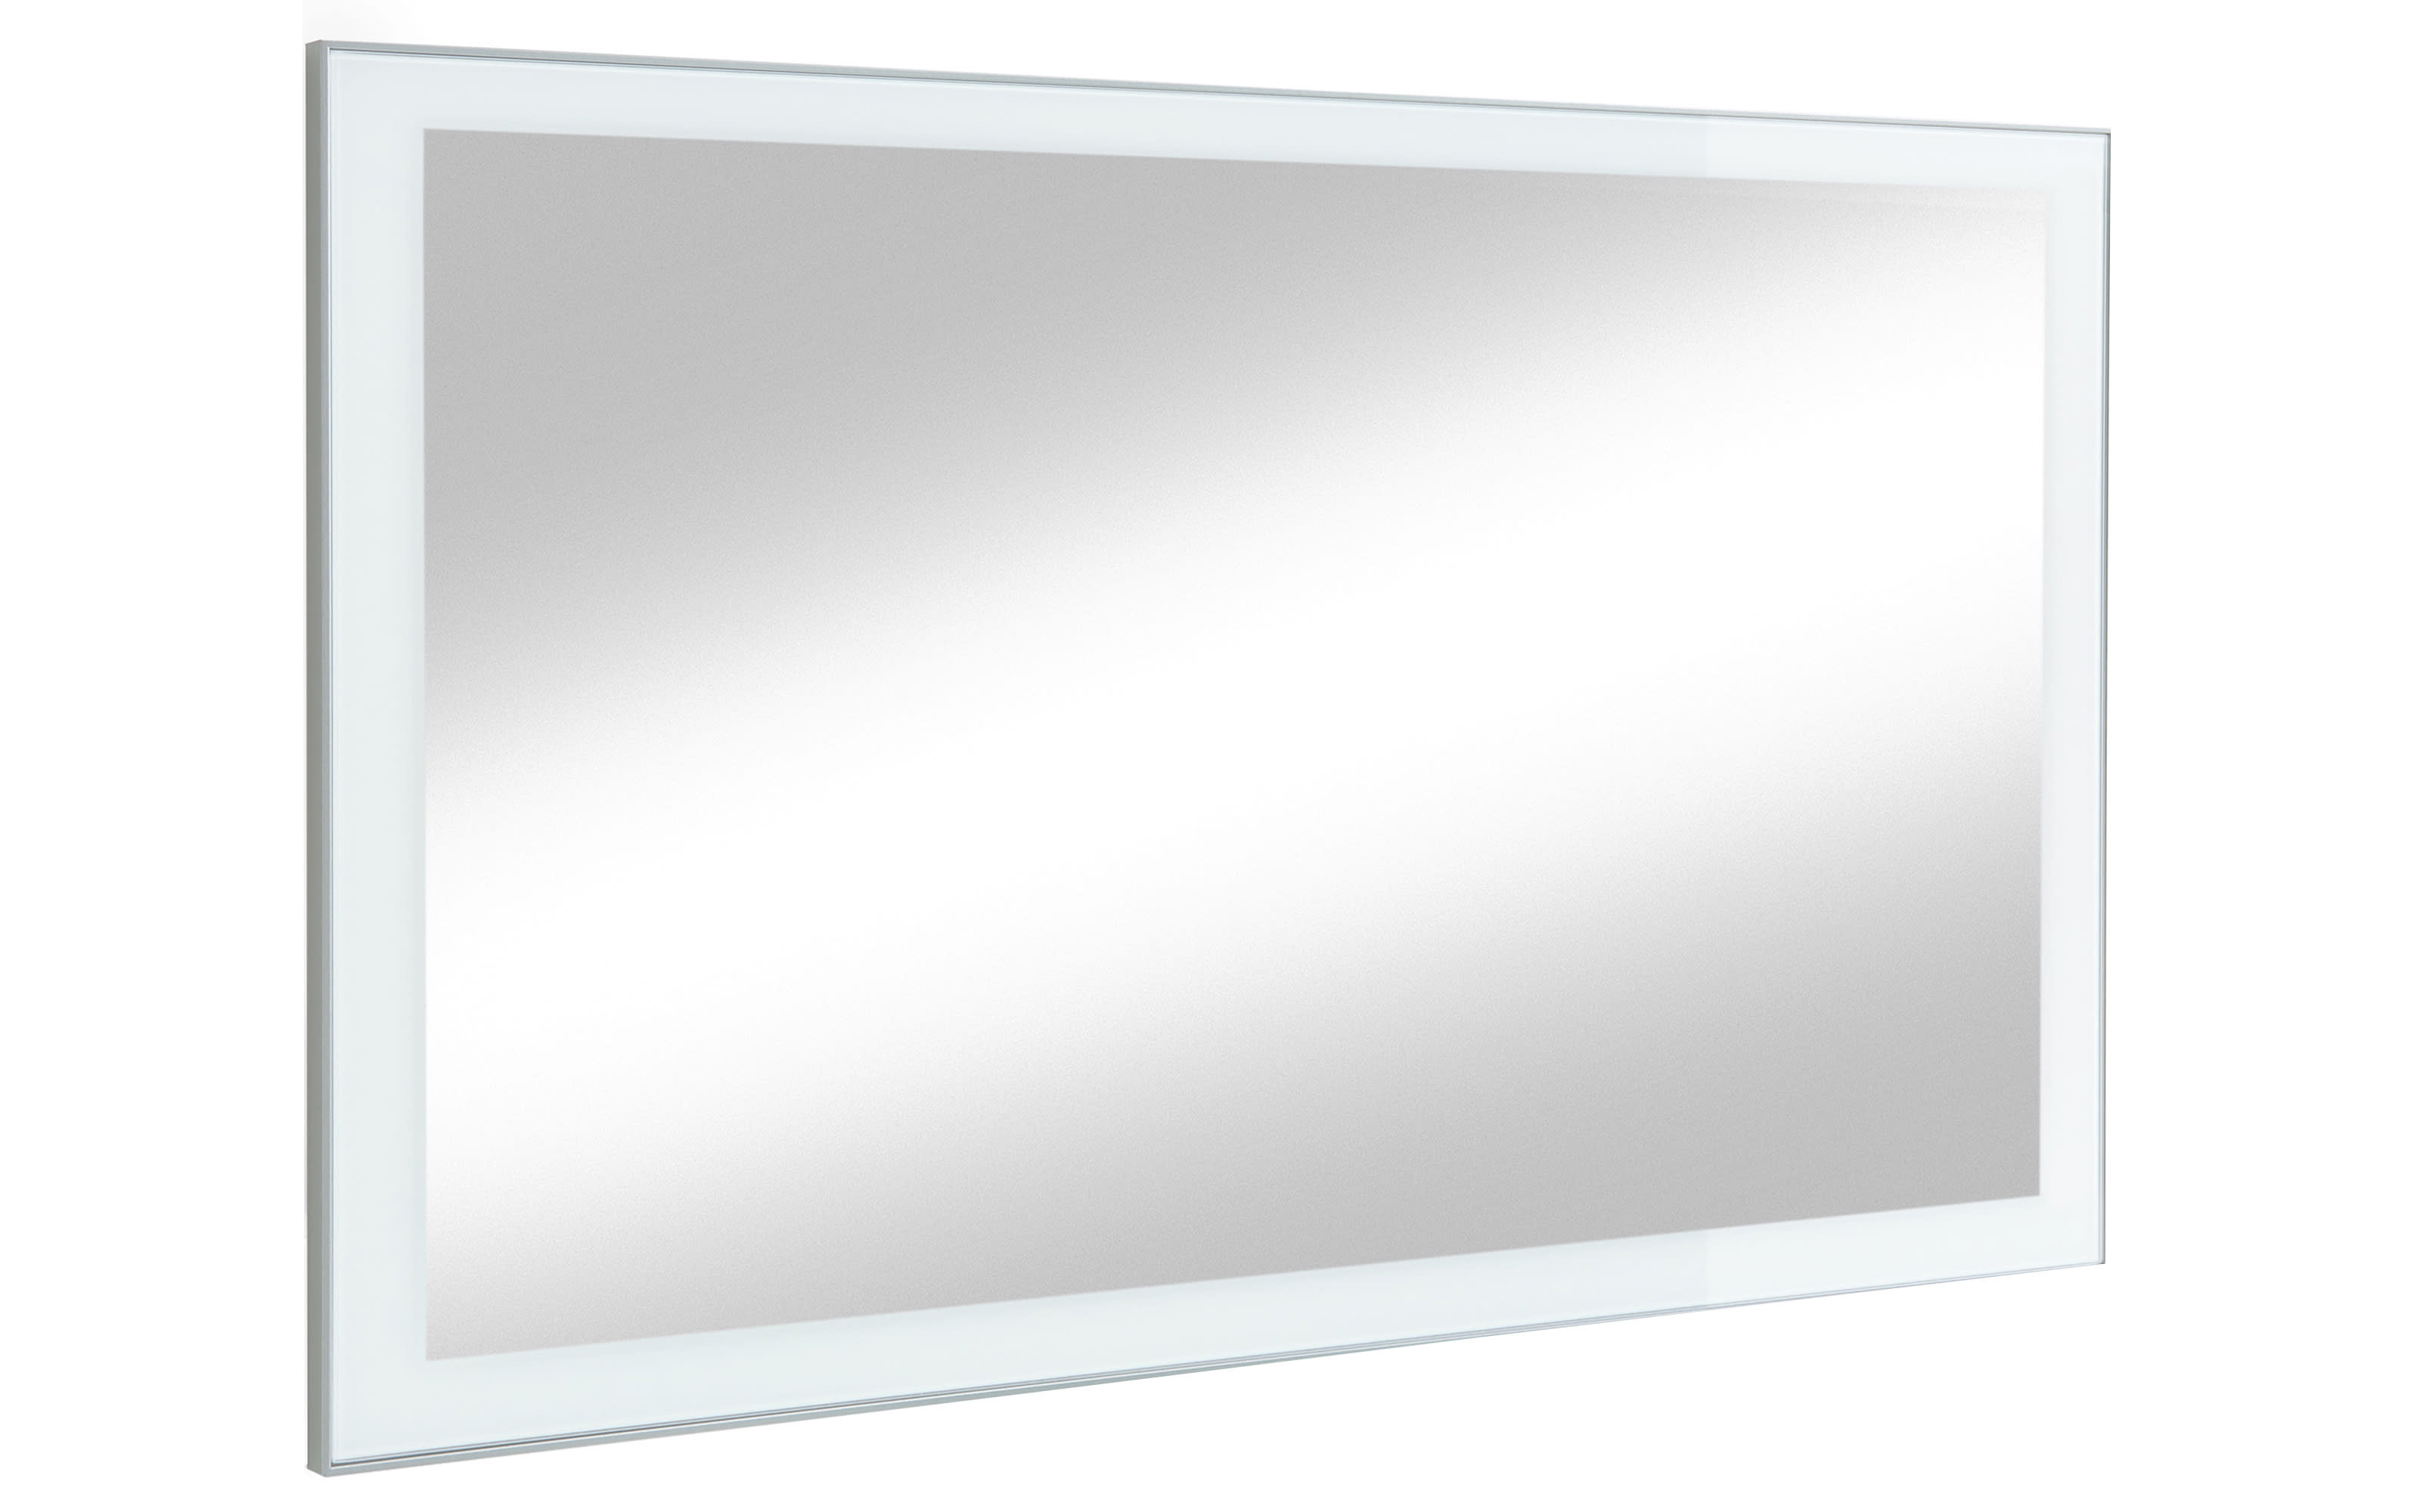 Spiegel Santina Set 1, weiß, 120 x 60 cm